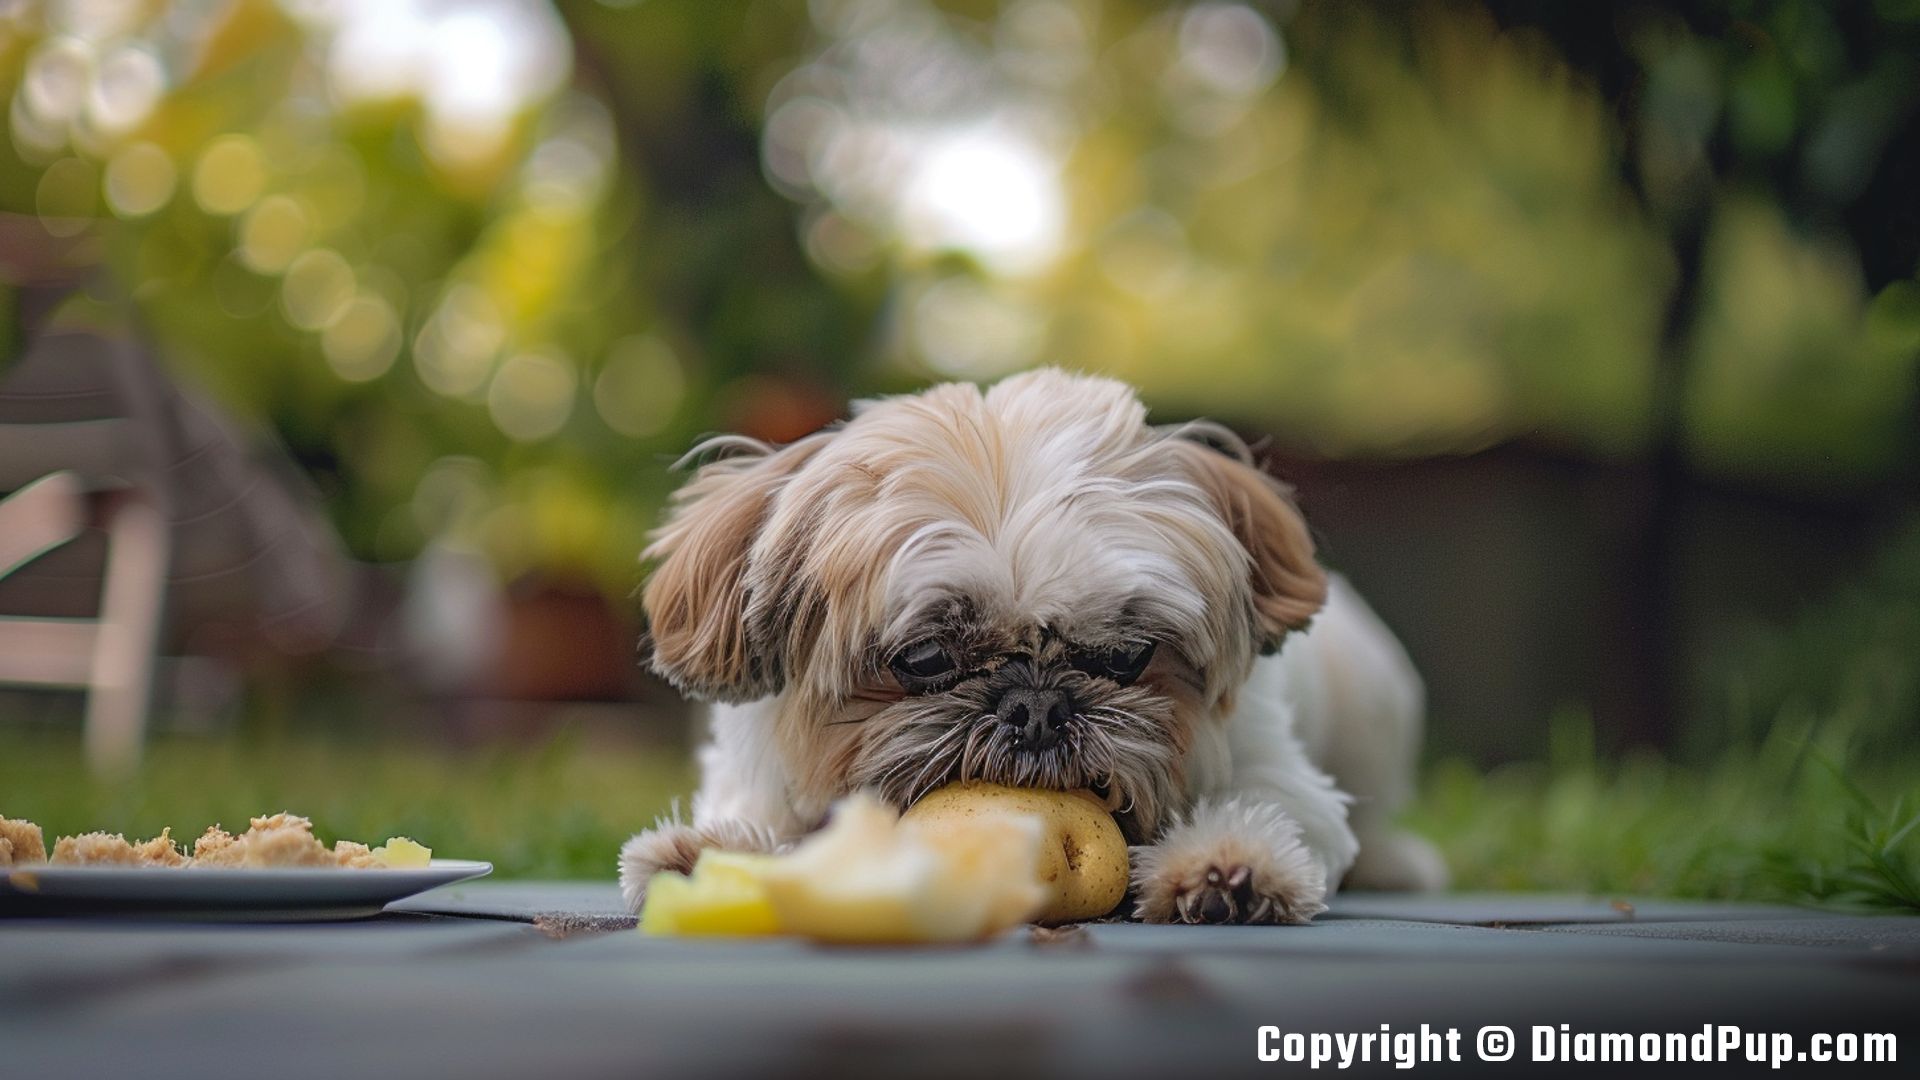 Photograph of an Adorable Shih Tzu Eating Potato